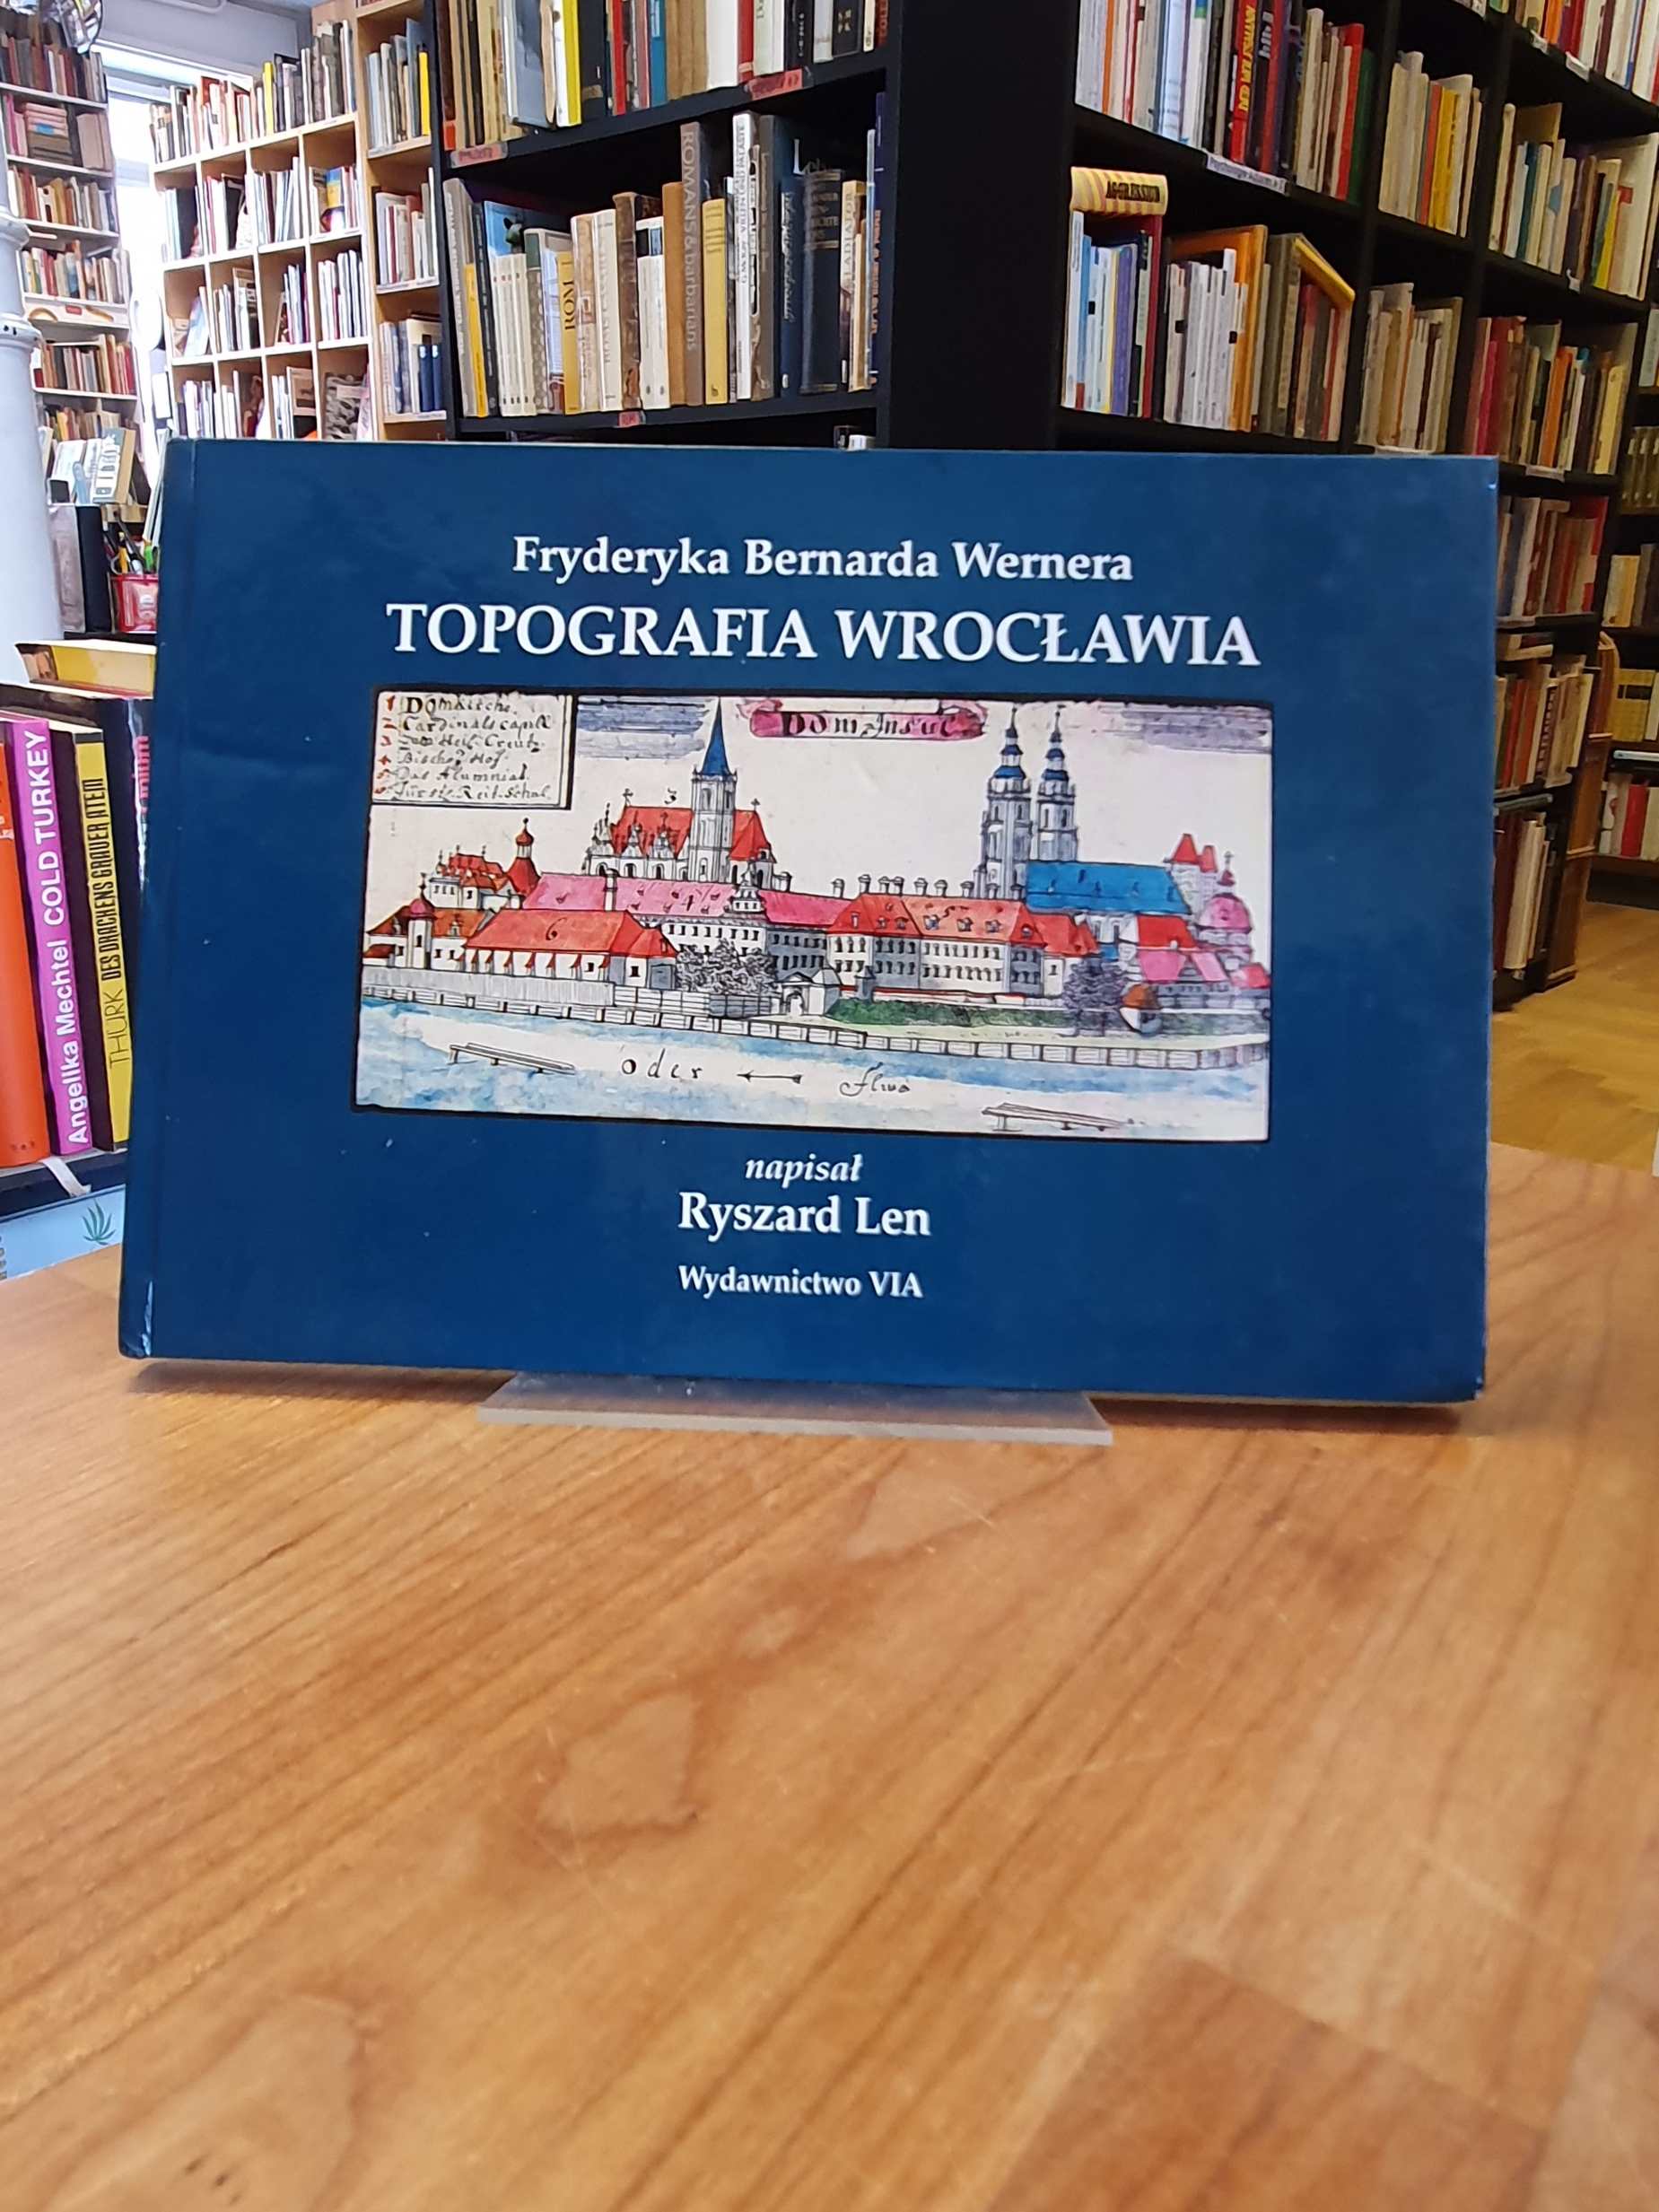 Len, Fryderyka Bernarda Wernera „Topografia Wroclawia“,